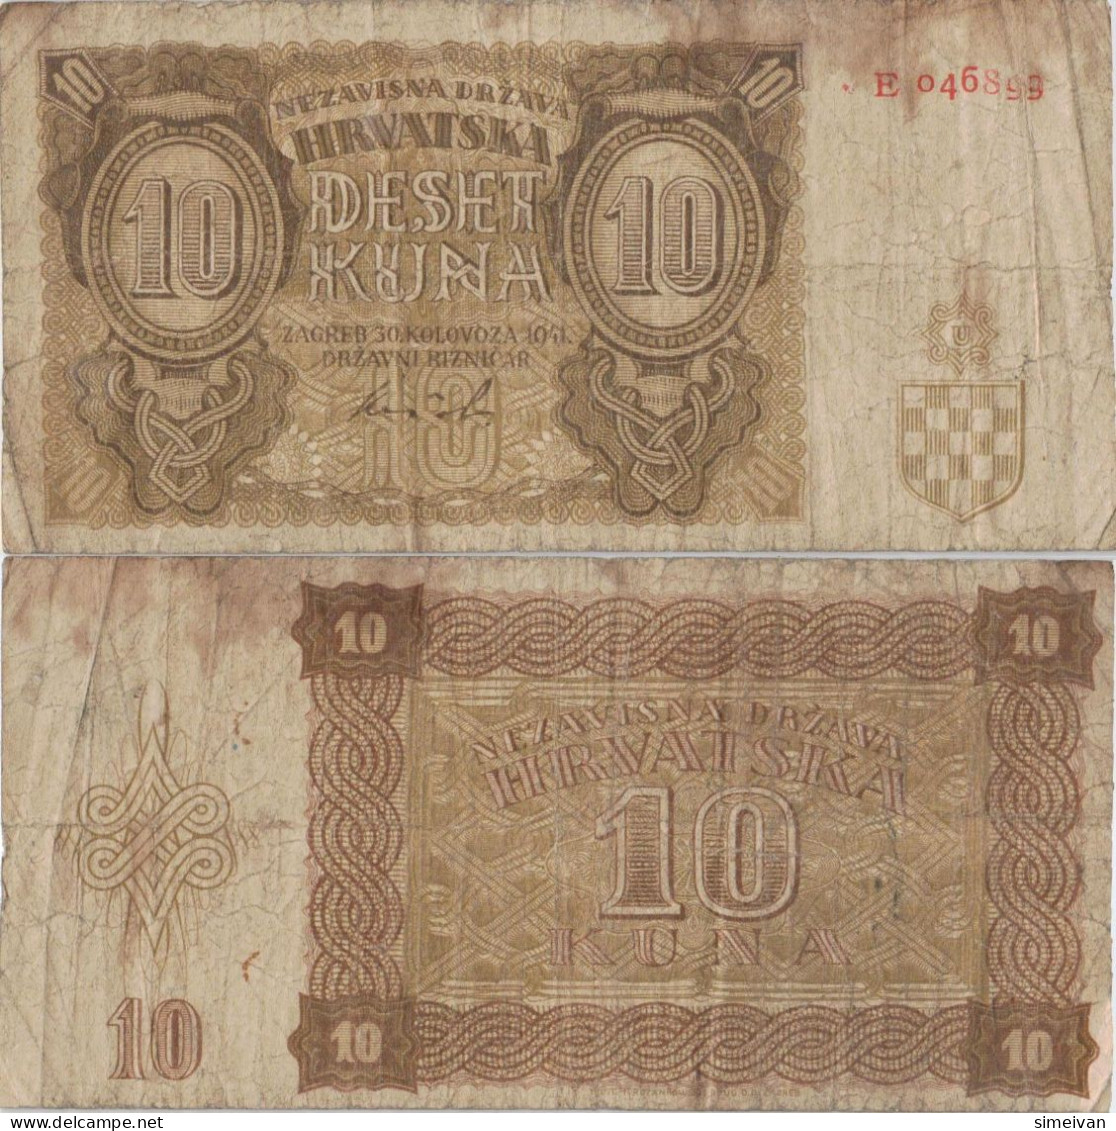 Croatia 10 Kuna 1941 P-5a Banknote Europe Currency Croatie Kroatien #5323 - Croazia